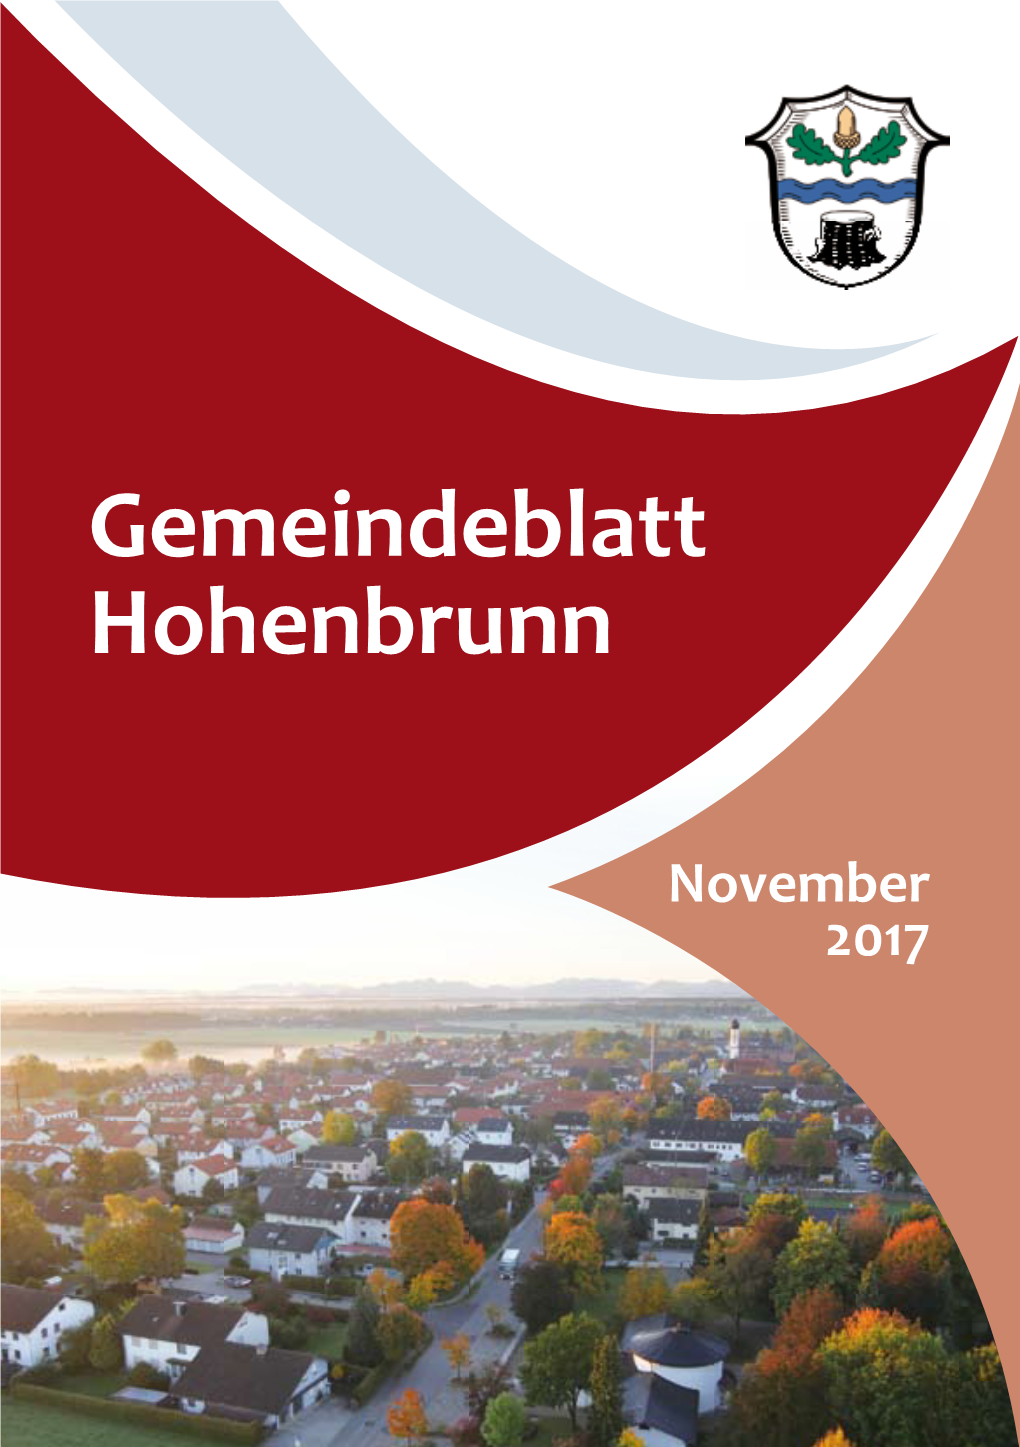 Gemeindeblatt Hohenbrunn